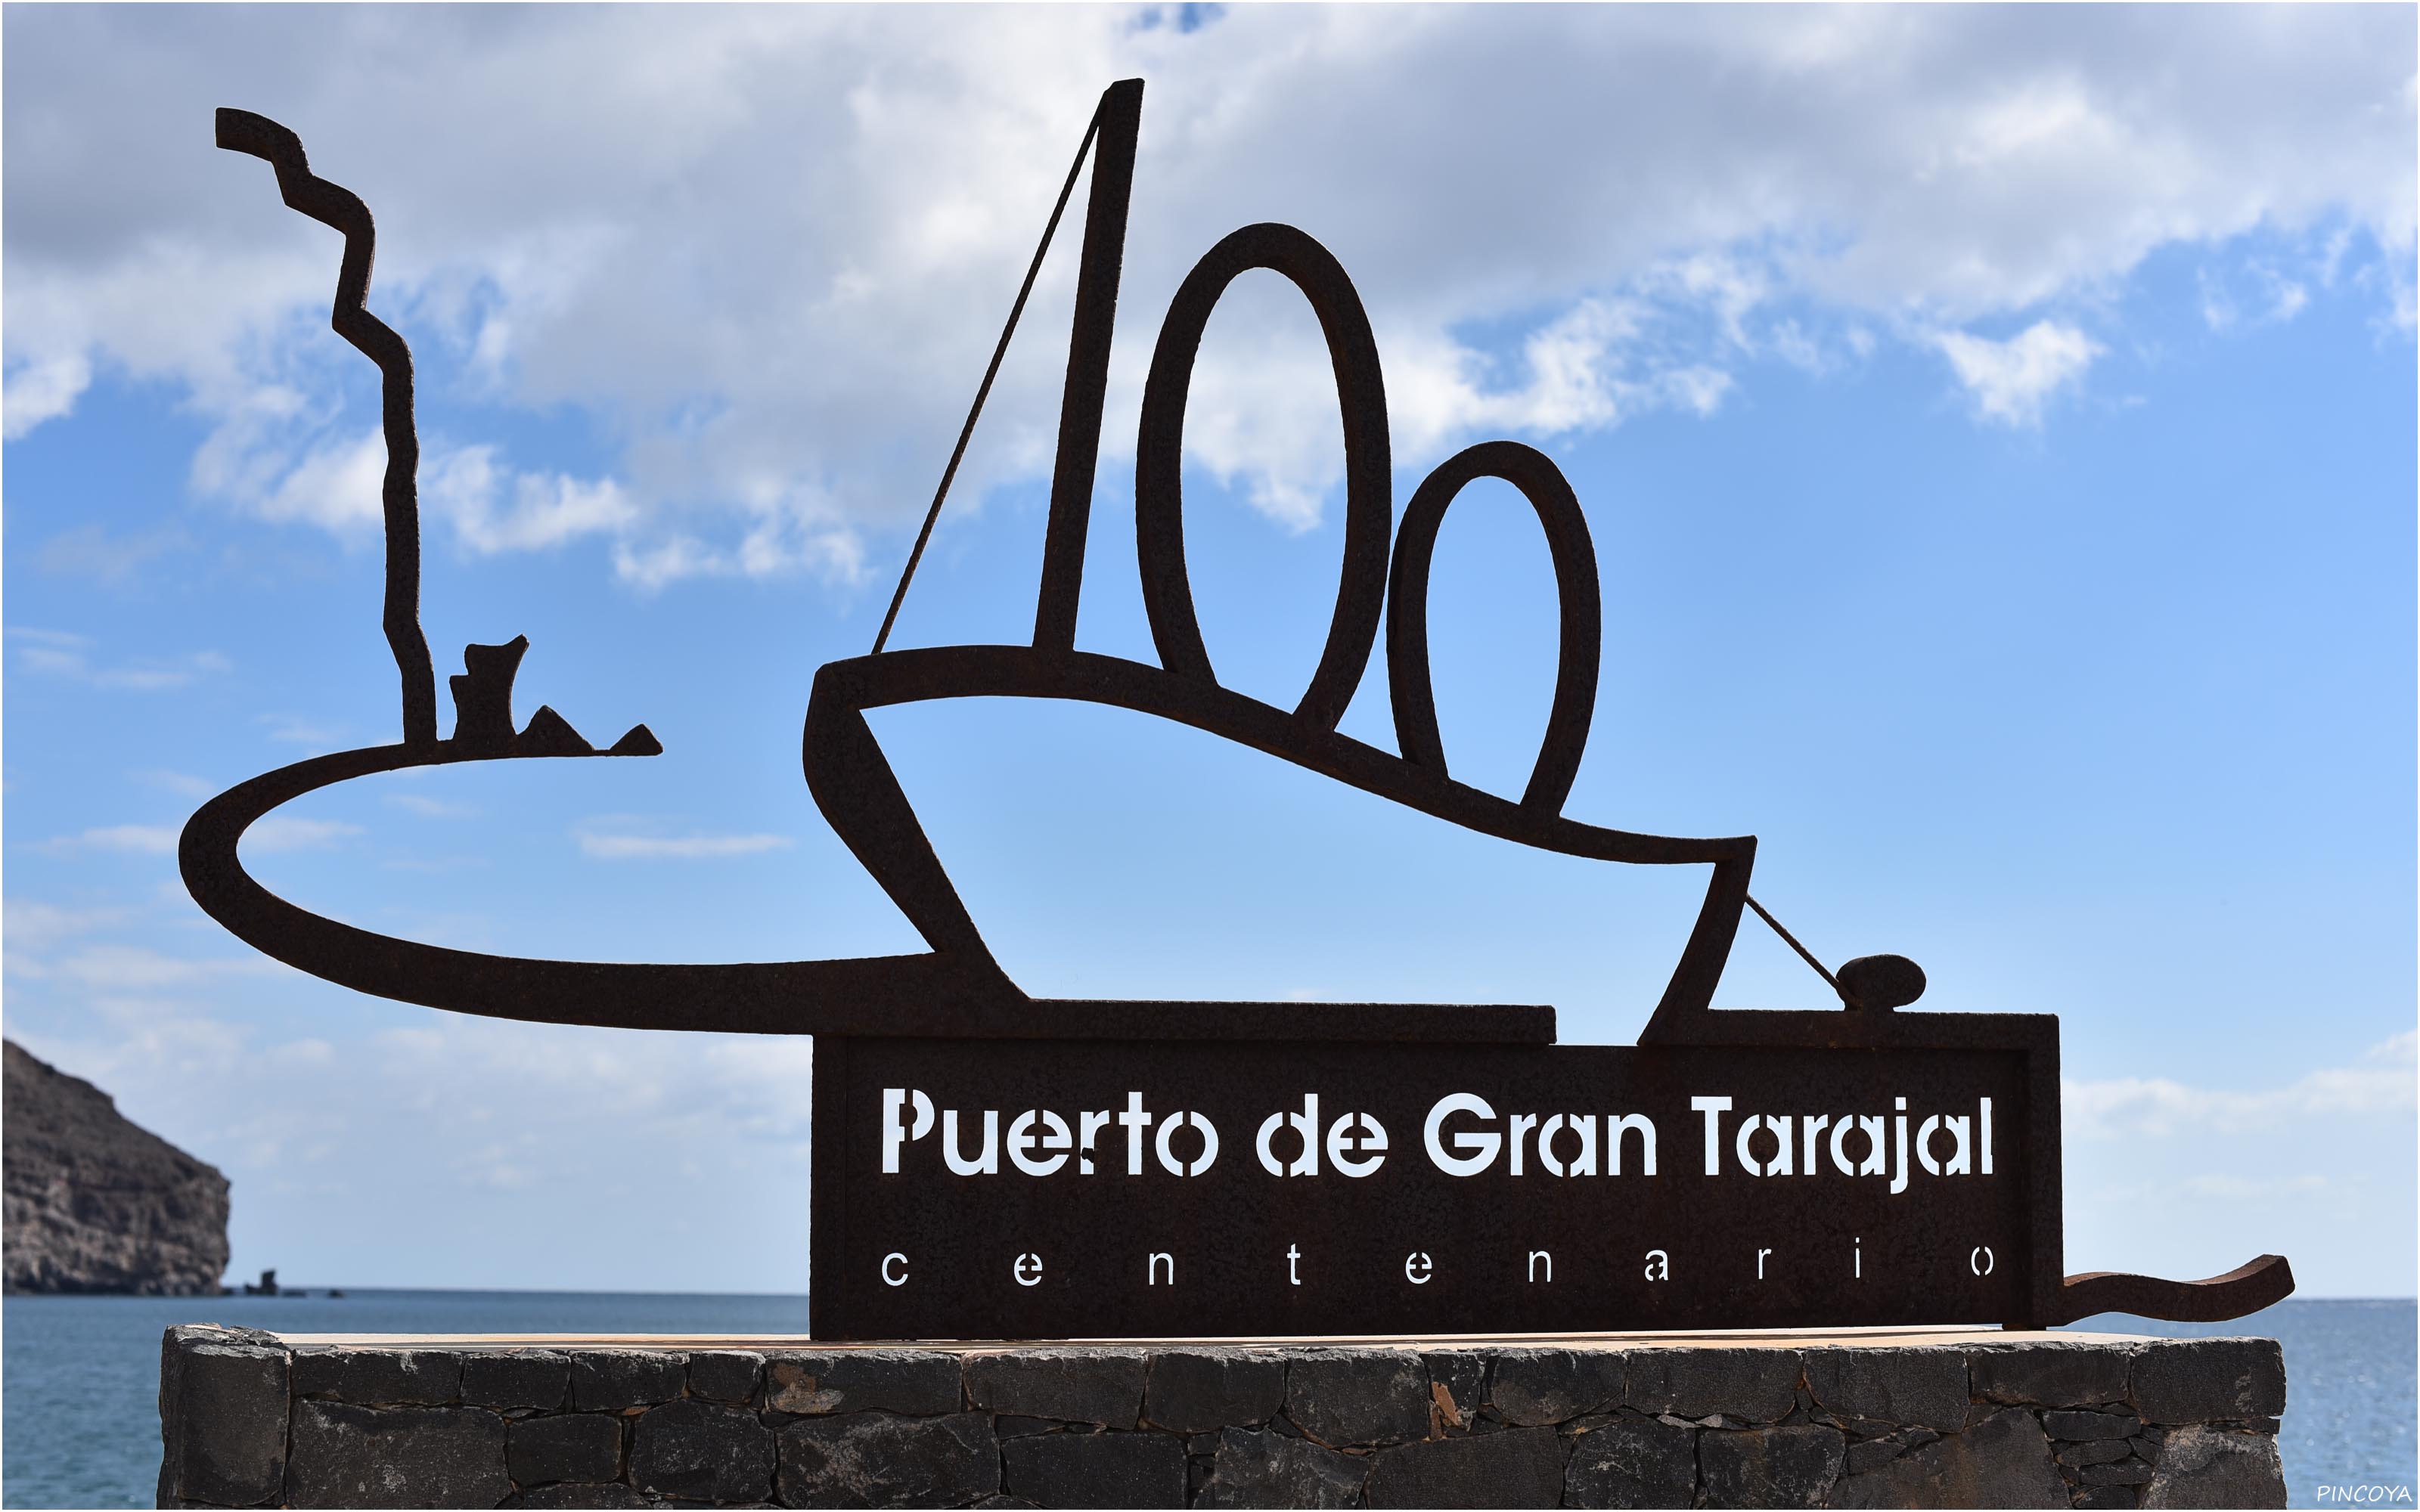 „Puerto de Gran Tarajal“